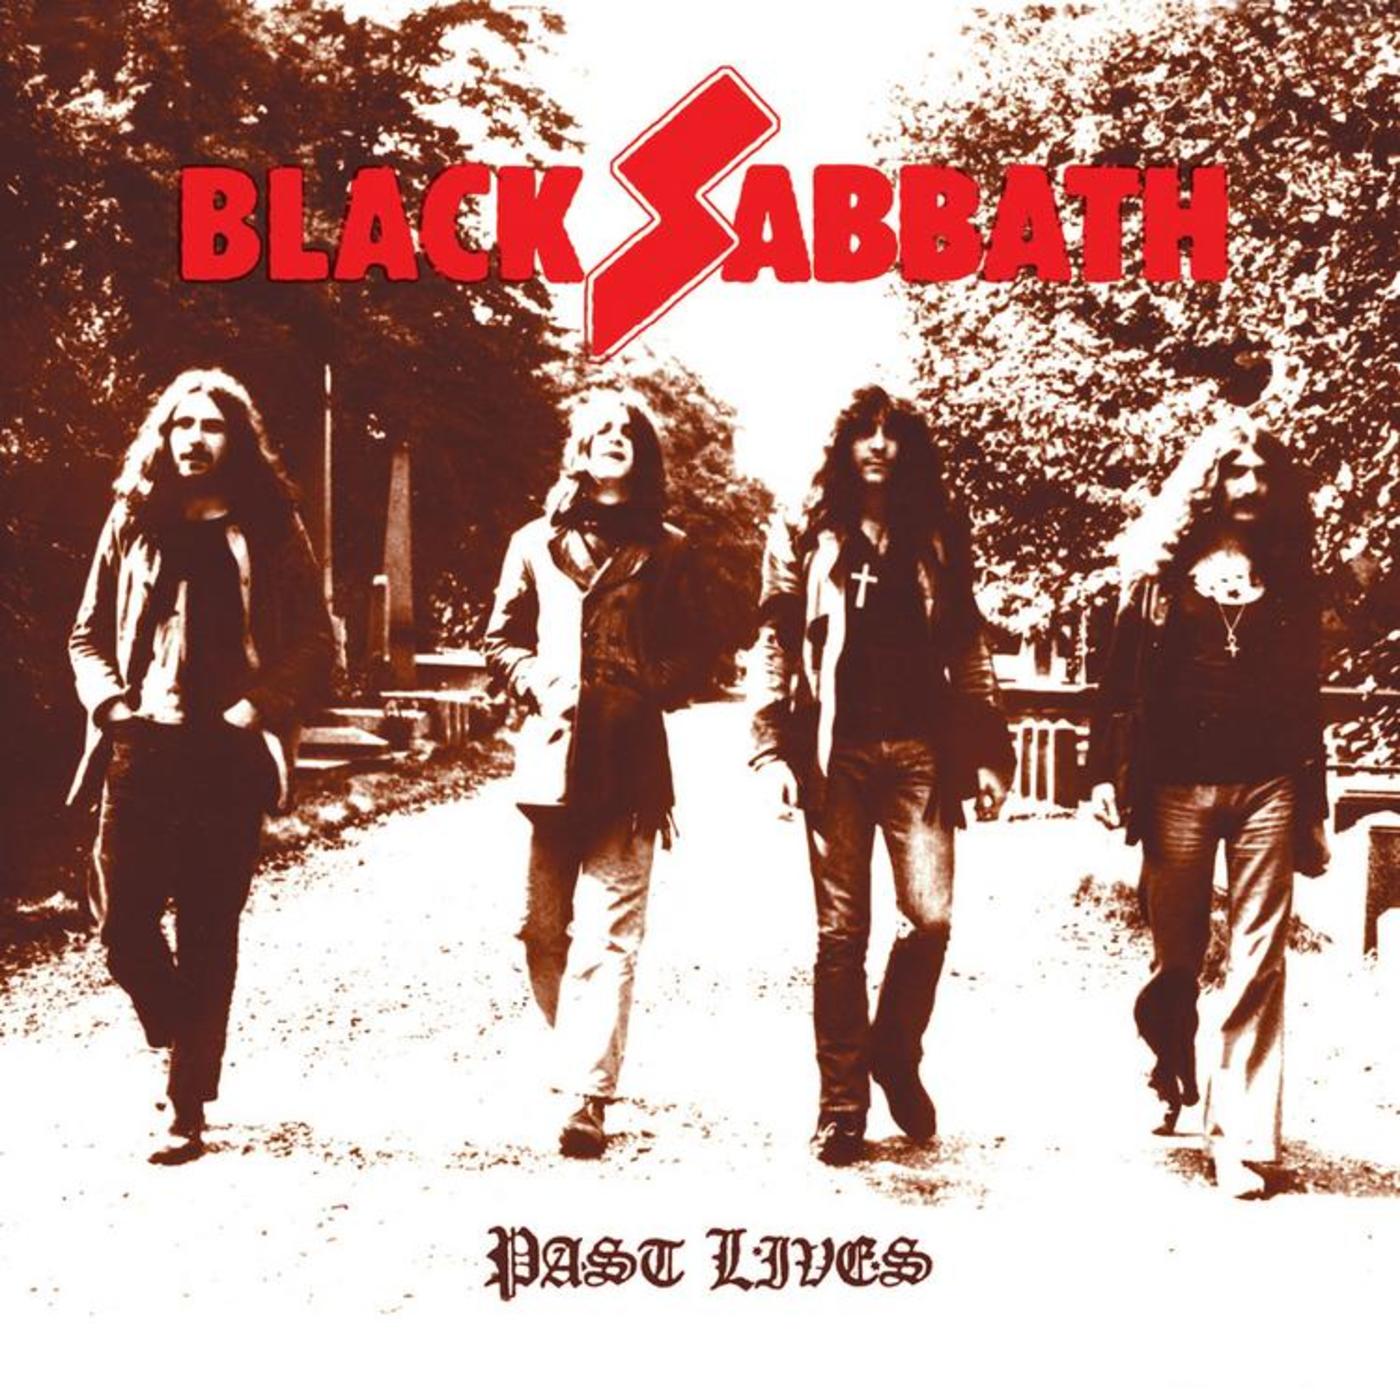 限定割引2CD！Black Sabbath / Past Lives - Deluxe 洋楽